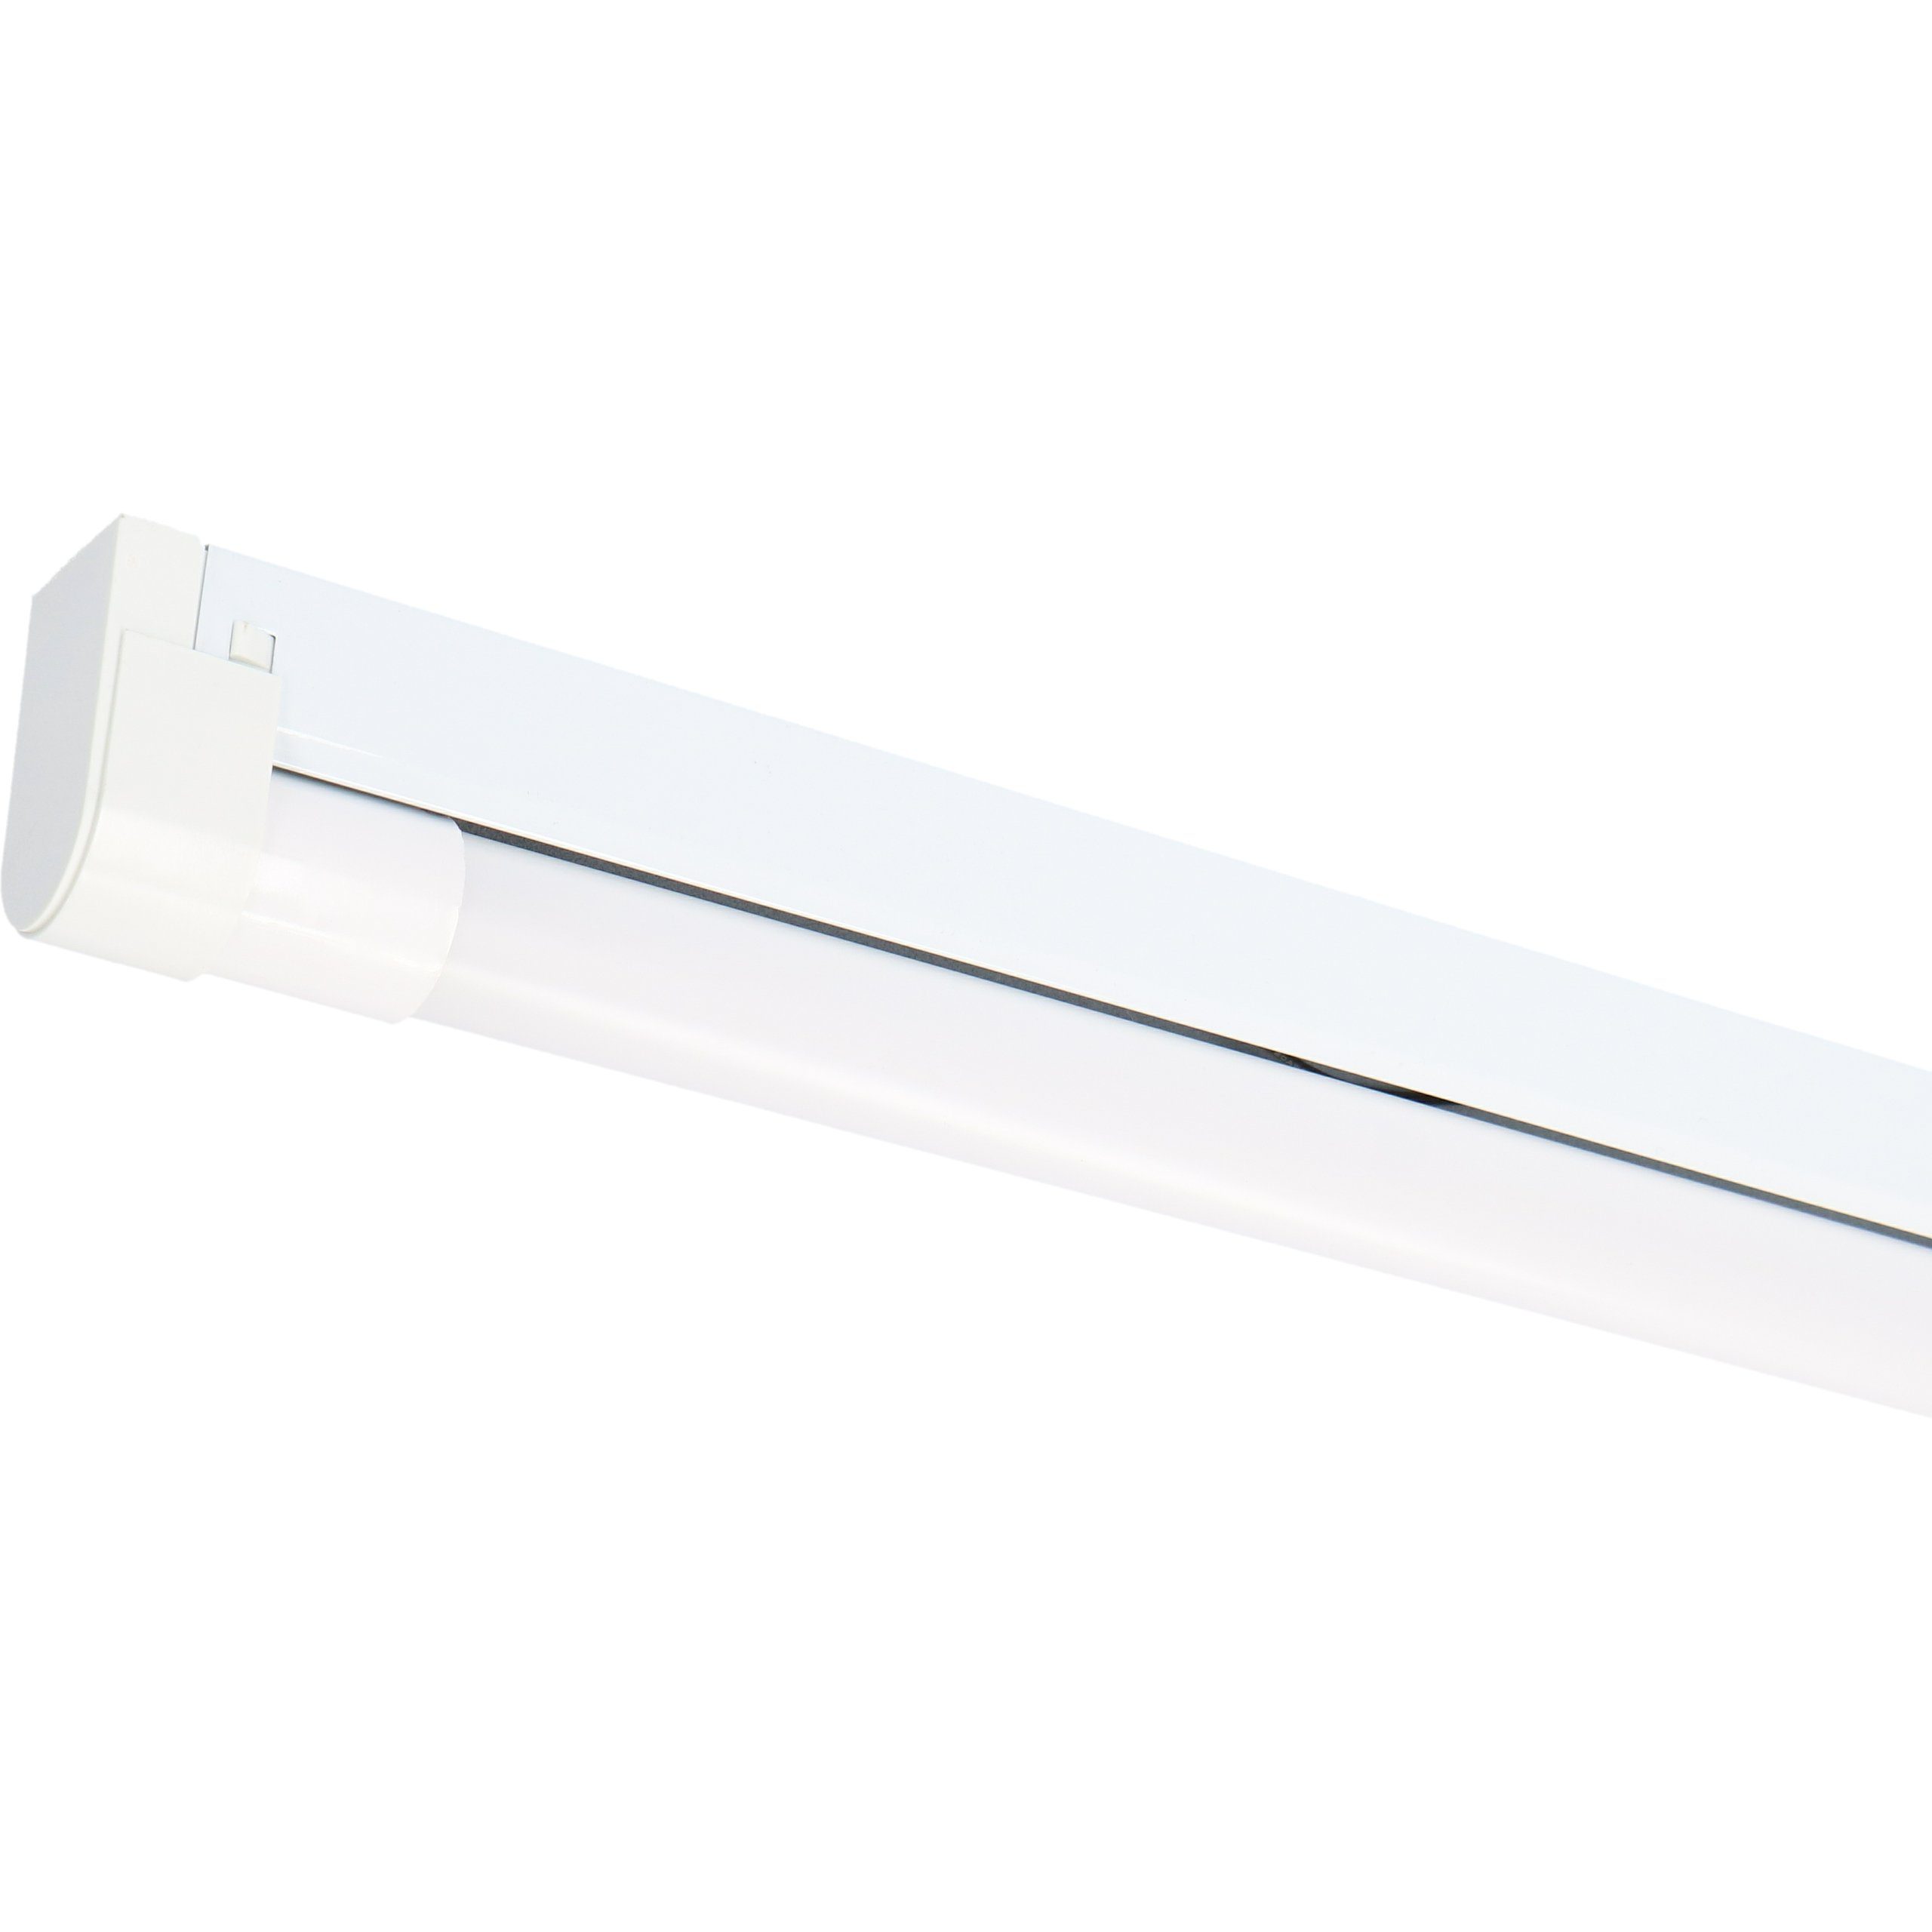 LED's light LED Unterbauleuchte 2400212 LED-Unterbauleuchte mit LED-Röhre, LED, 150 cm 9 Watt neutralweiß G13